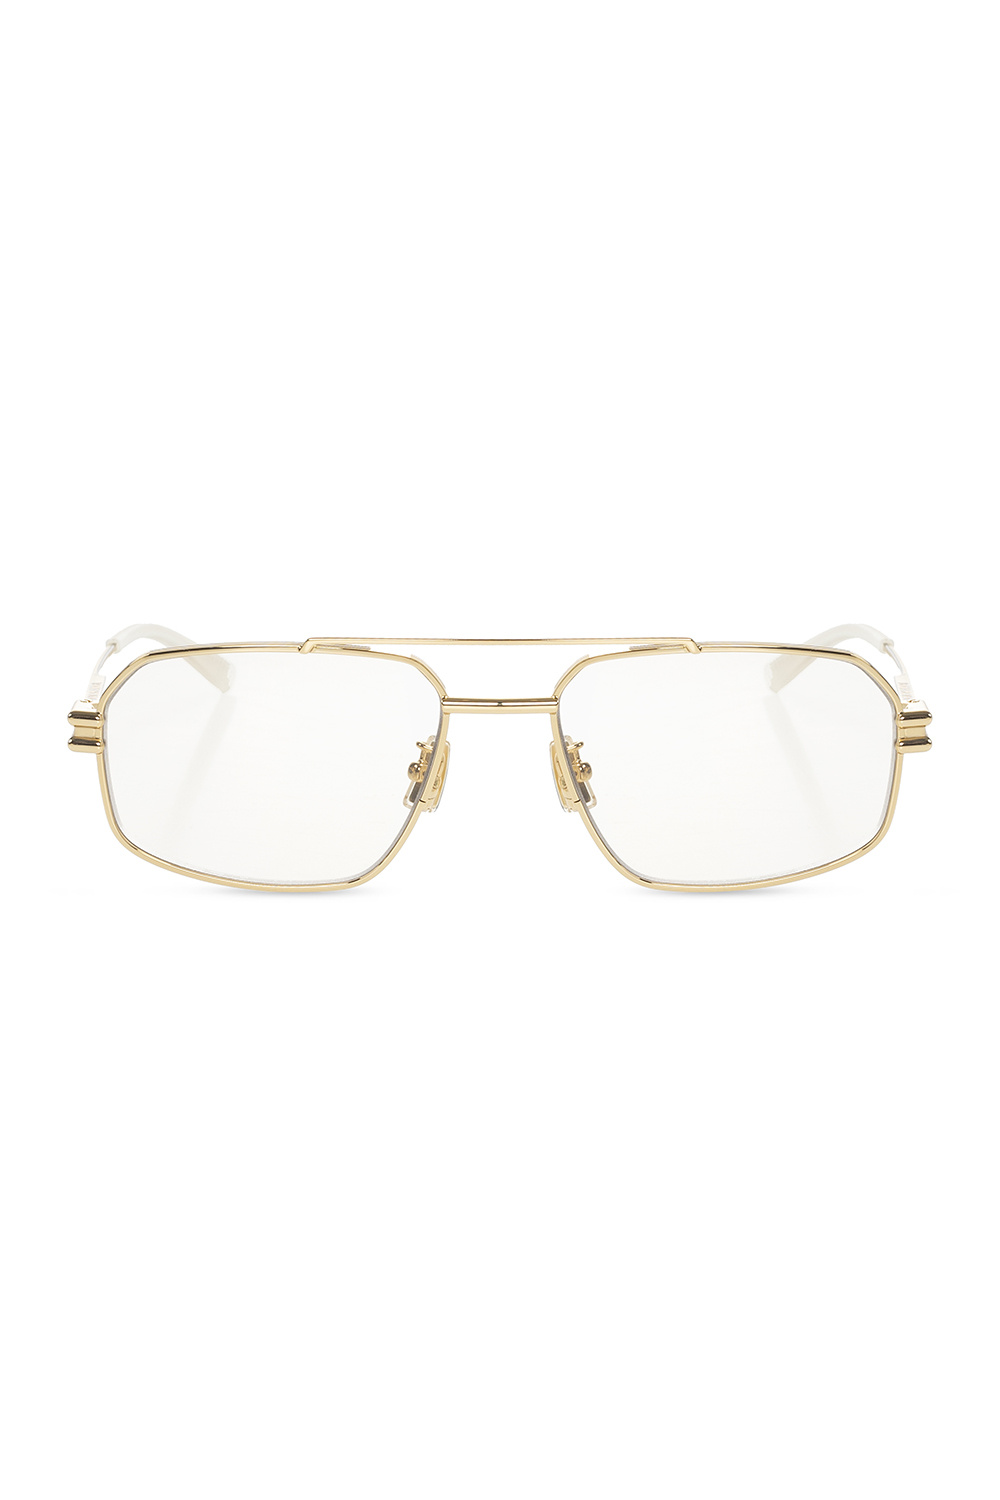 Bottega Veneta balenciaga eyewear rectangular frame sunglasses item